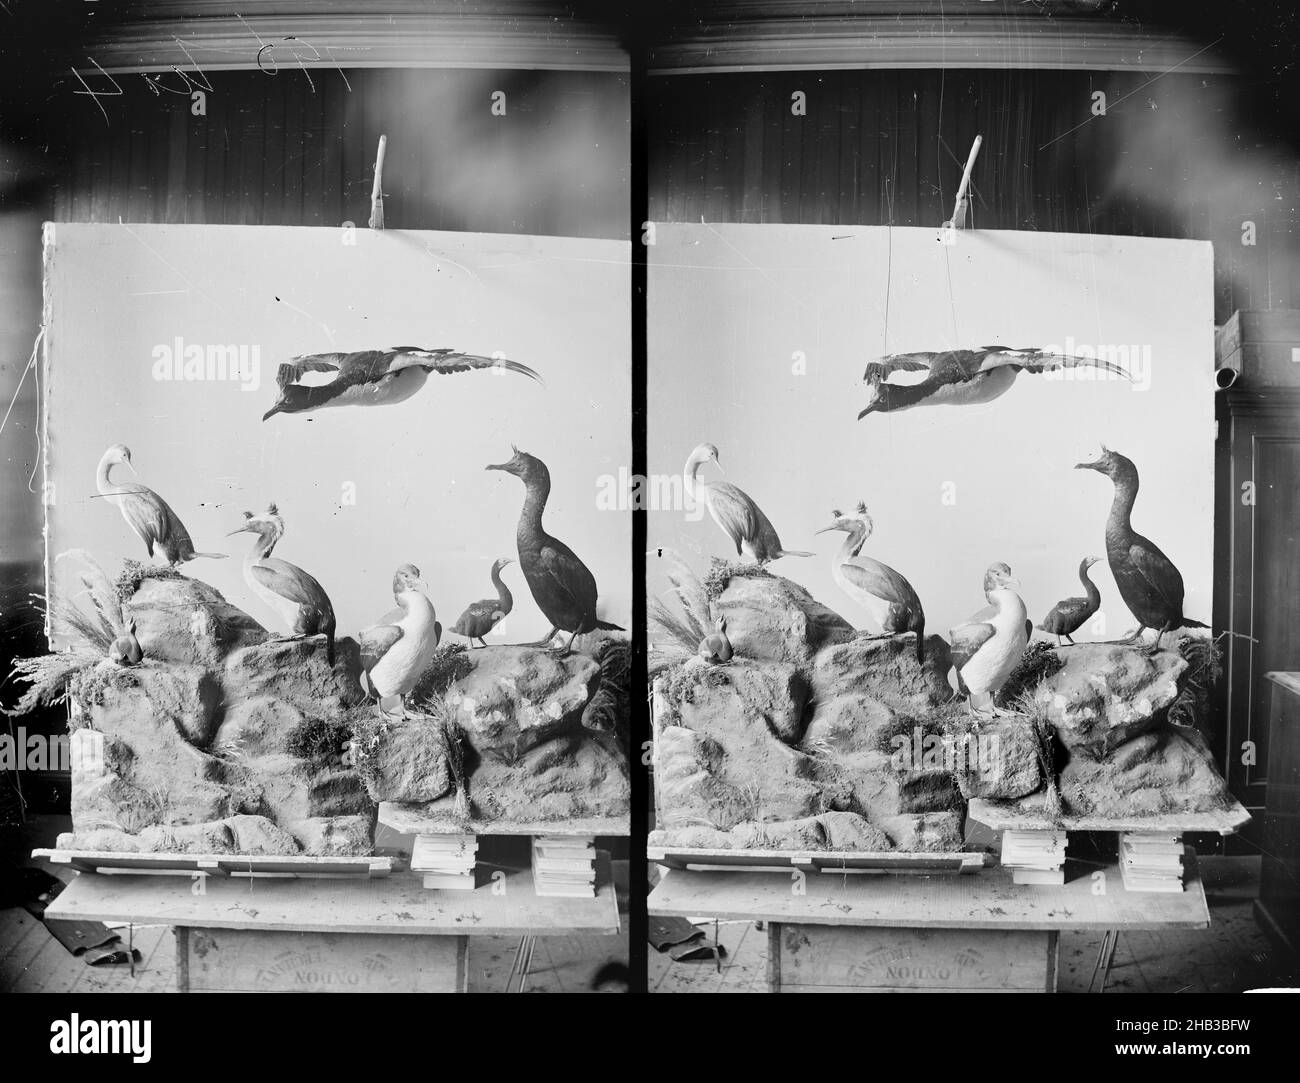 [Shags], Burton Brothers studio, photography studio, circa 1889, Dunedin, black-and-white photography, Display of stuffed birds Stock Photo